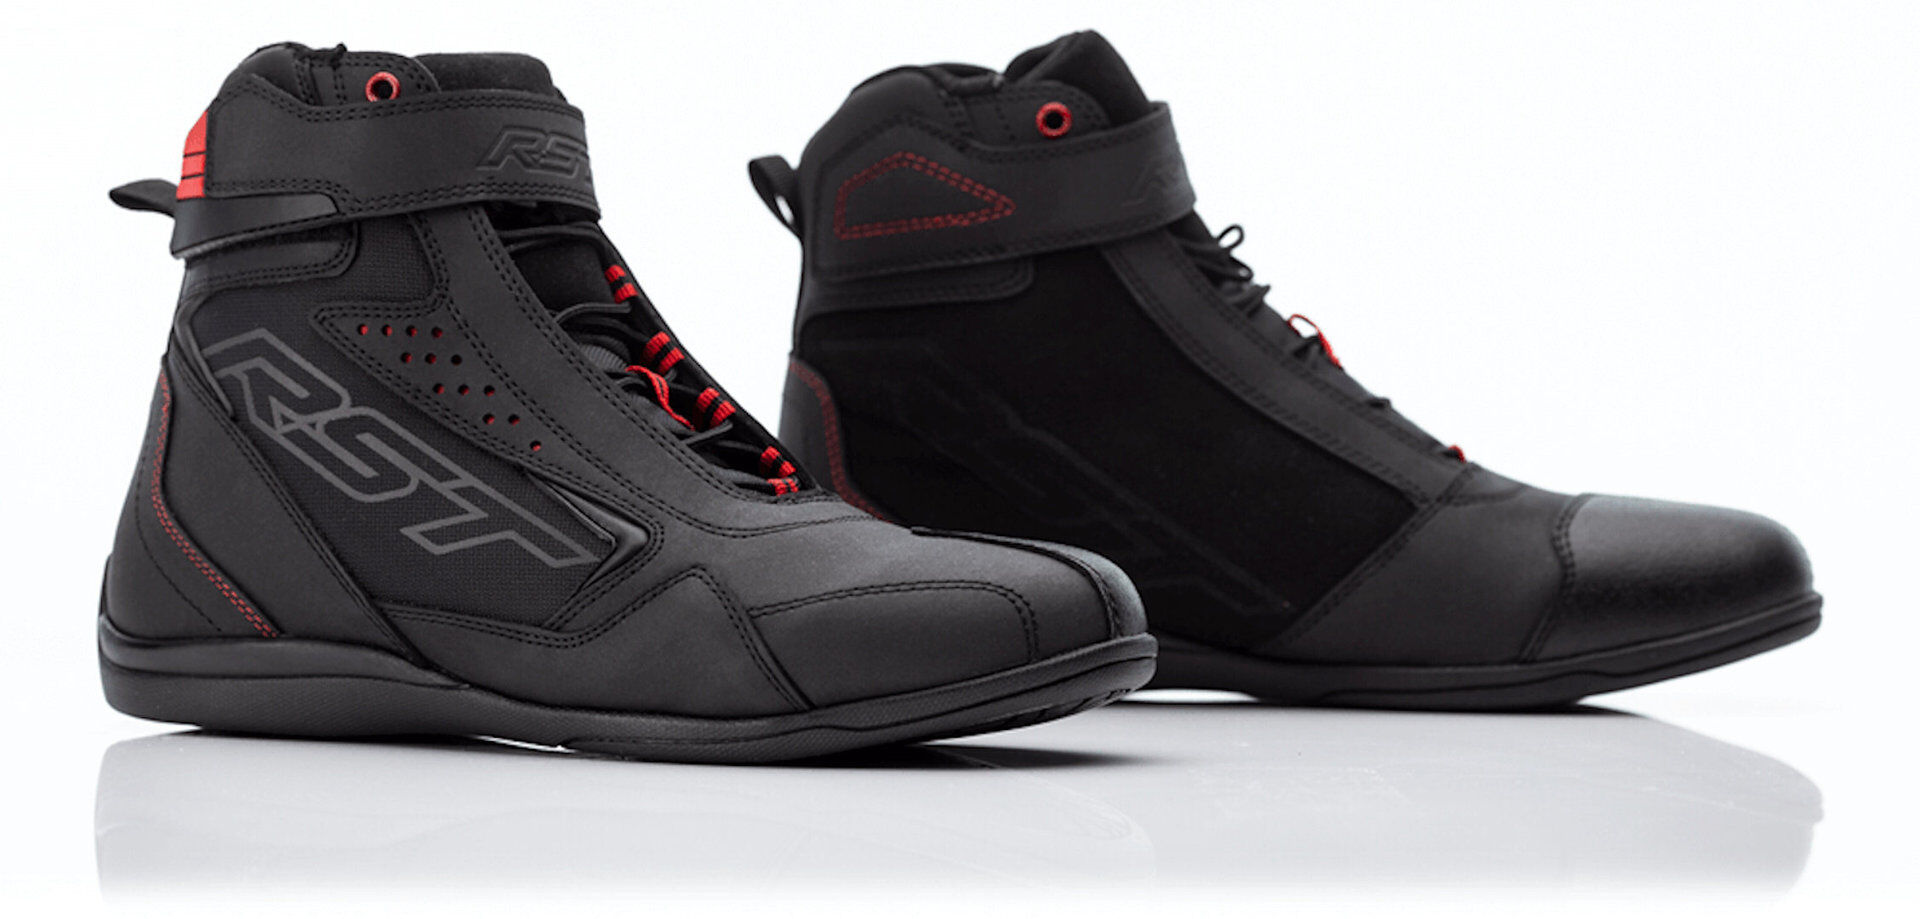 RST Frontier Zapatos de motocicleta para mujer - Negro Rojo (41)